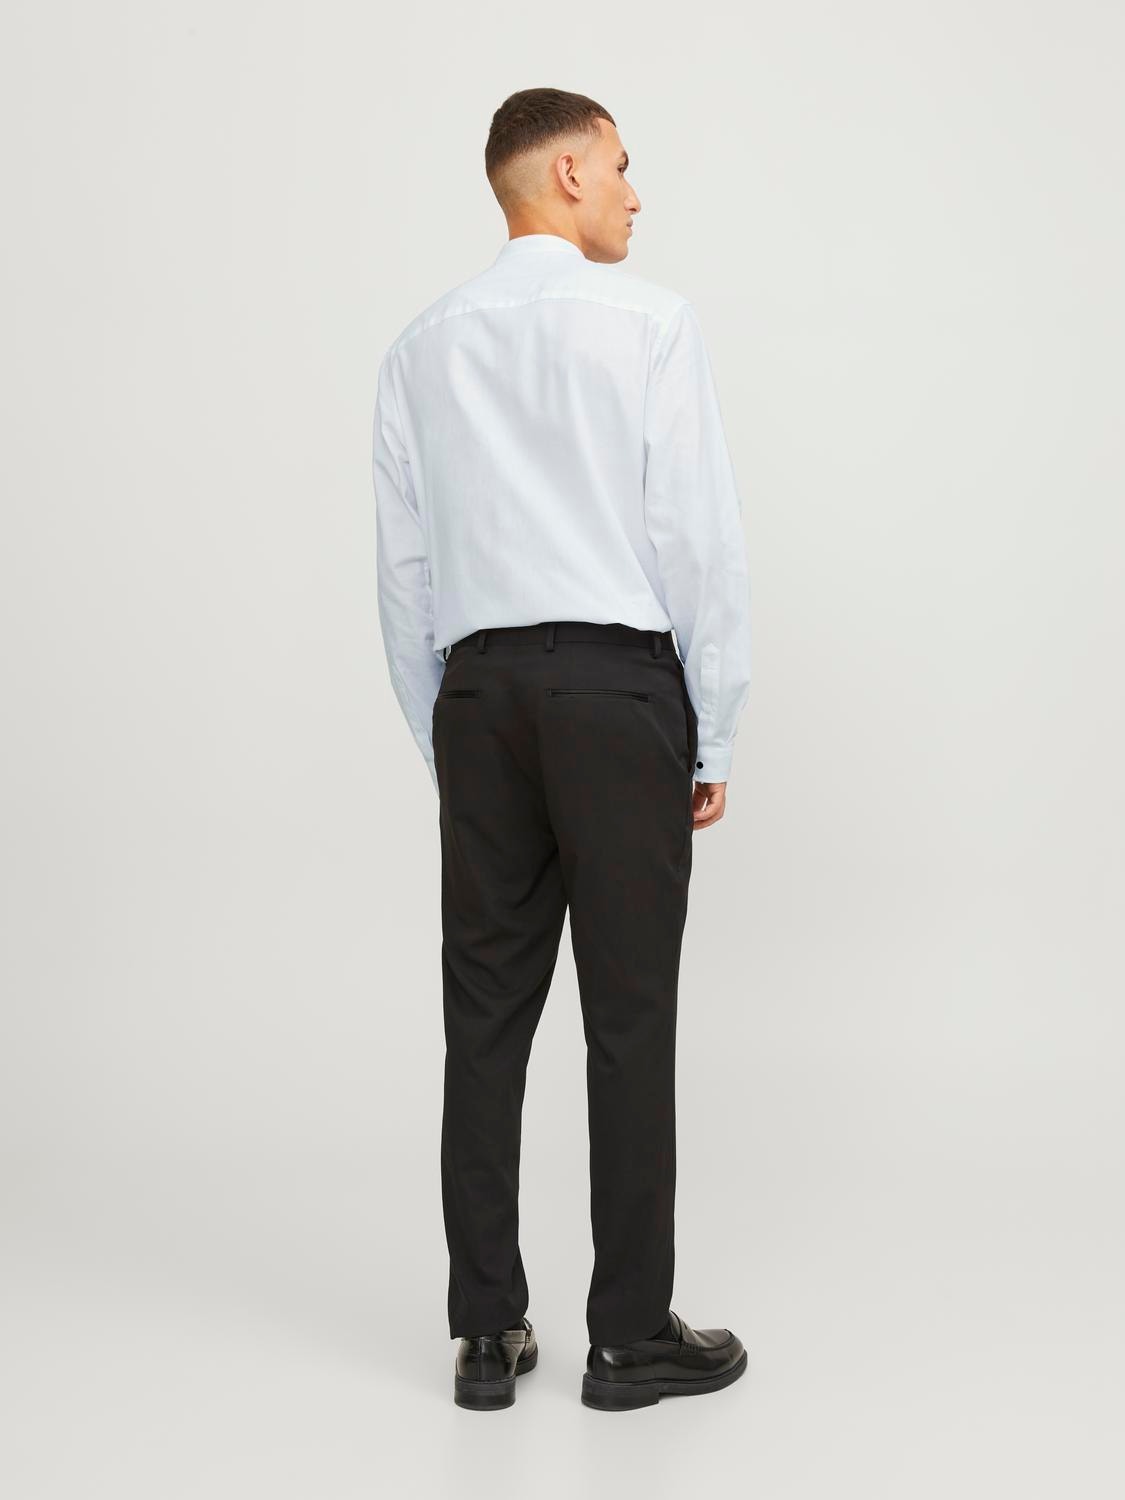 Jack & Jones Slim Fit Shirt -White - 12245614